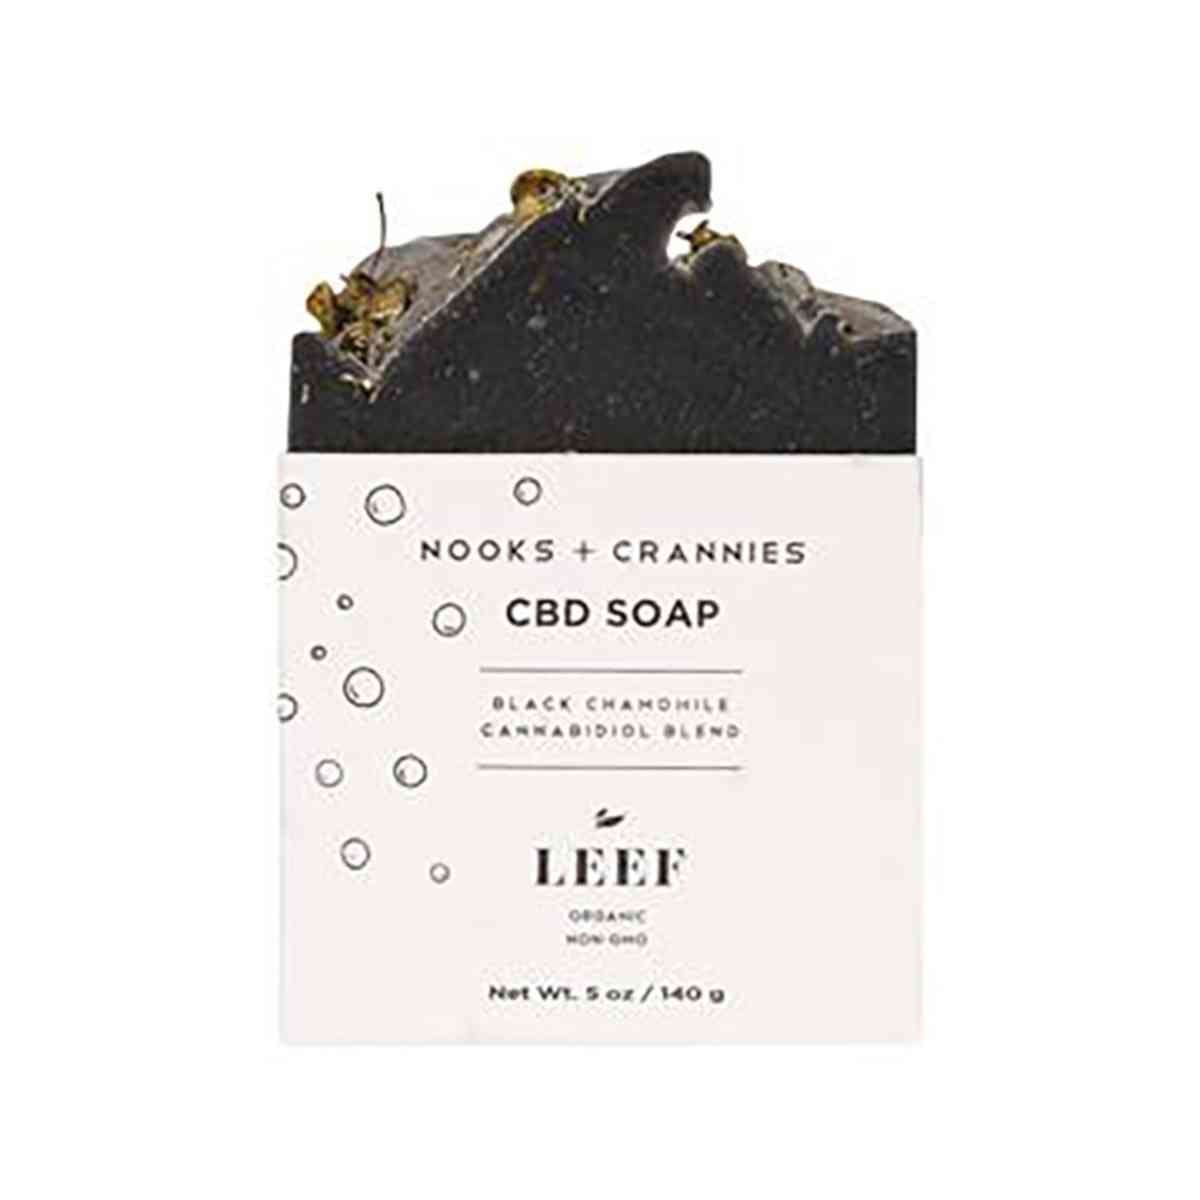 Black Chamomile Soap - Leef Organics